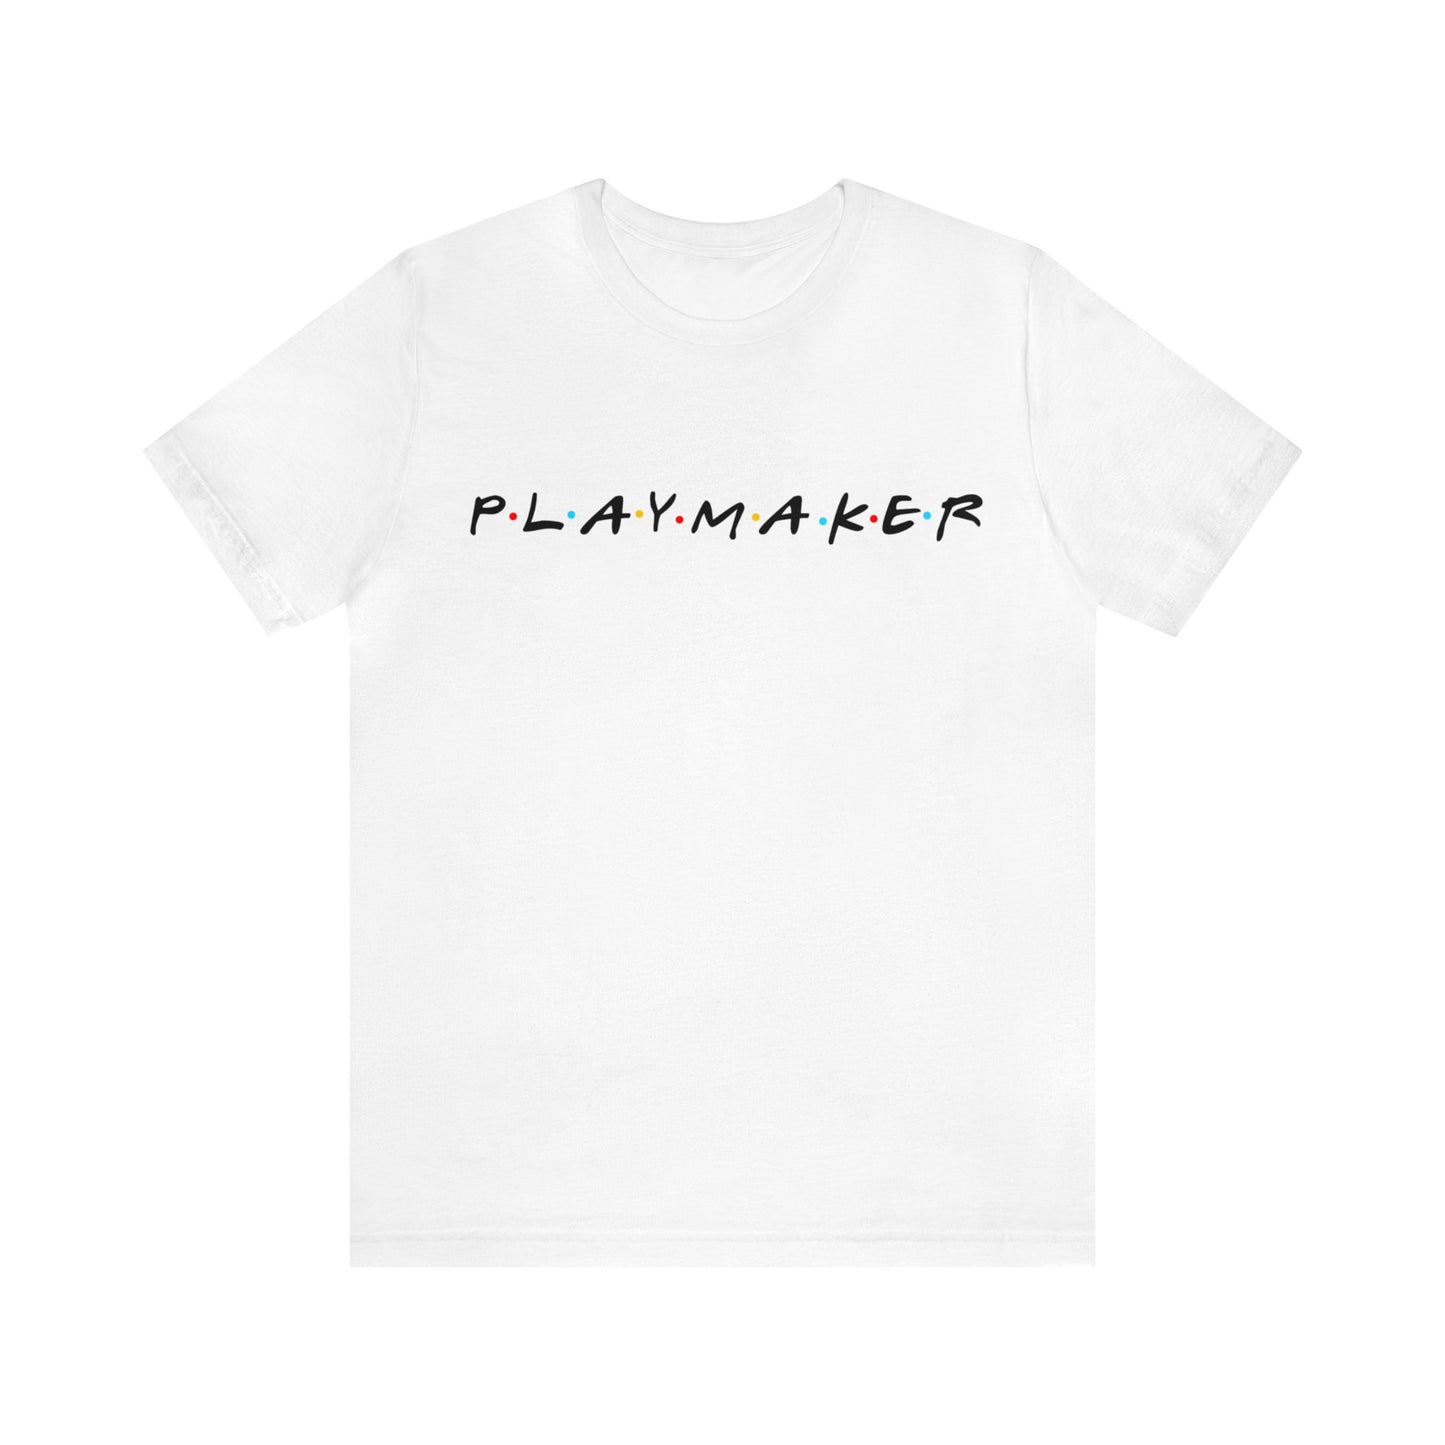 Playmaker "FRIENDS" Tee